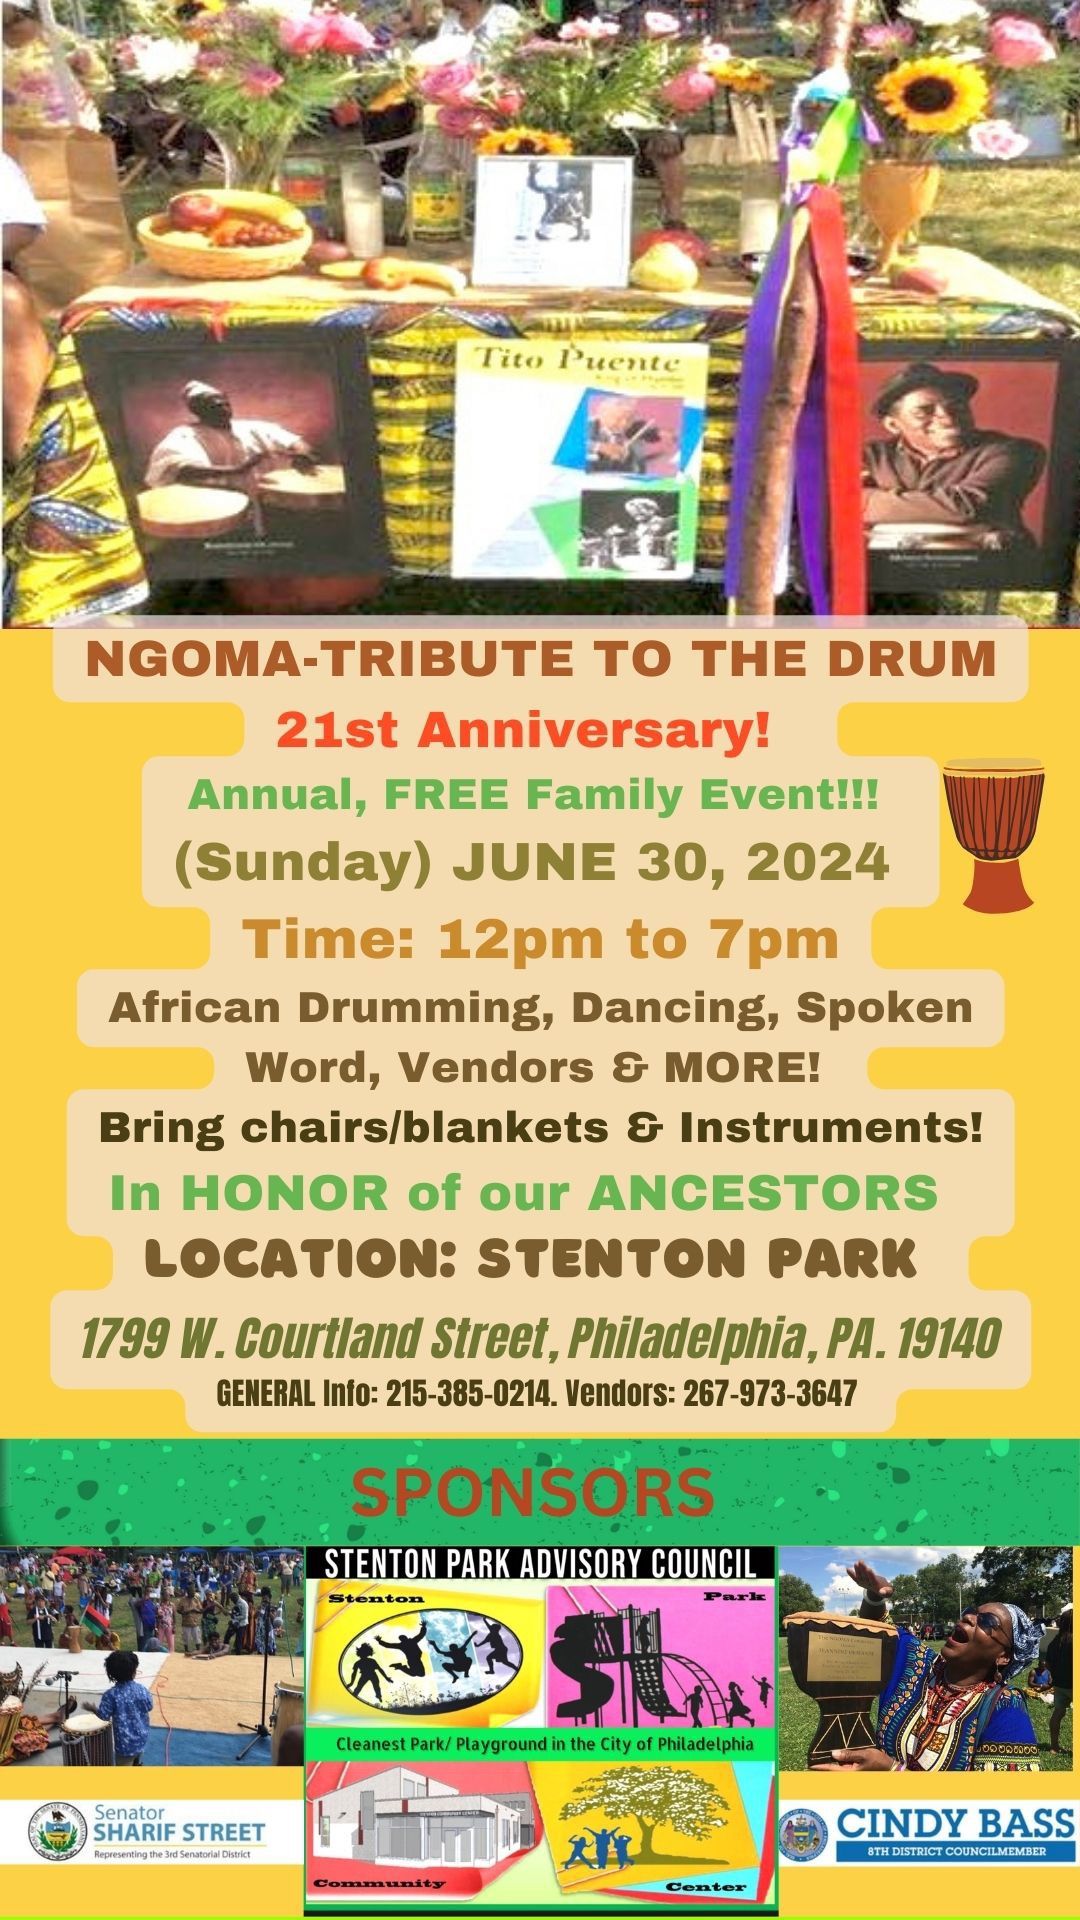 NGOMA-TRIBUTE TO THE DRUM 21st ANNIVERSARY!!!